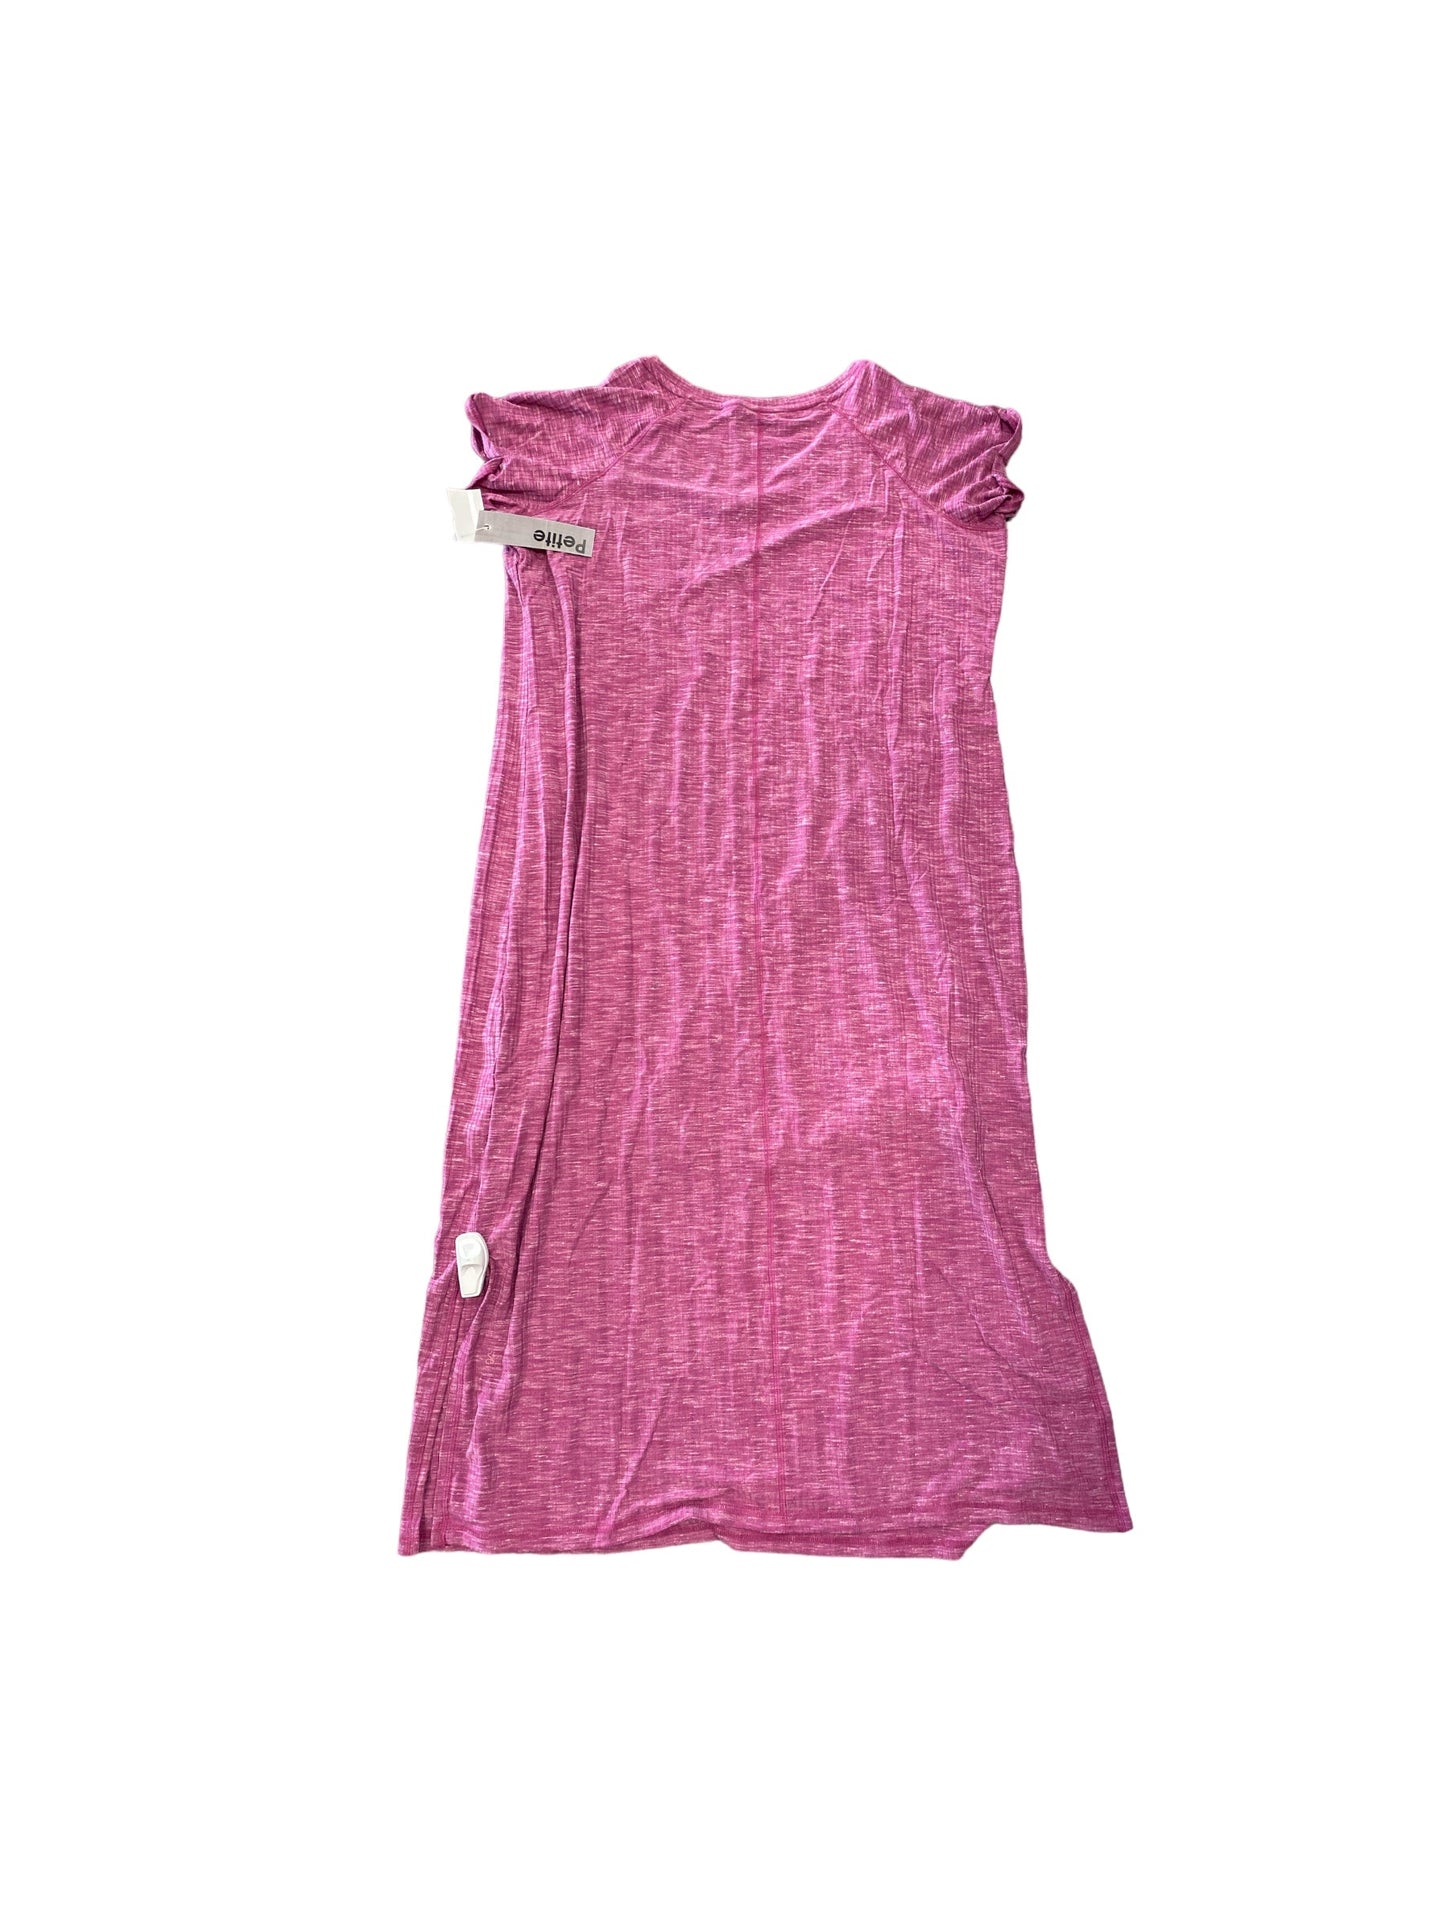 Dress Casual Maxi By Isaac Mizrahi Live Qvc  Size: Petite Large